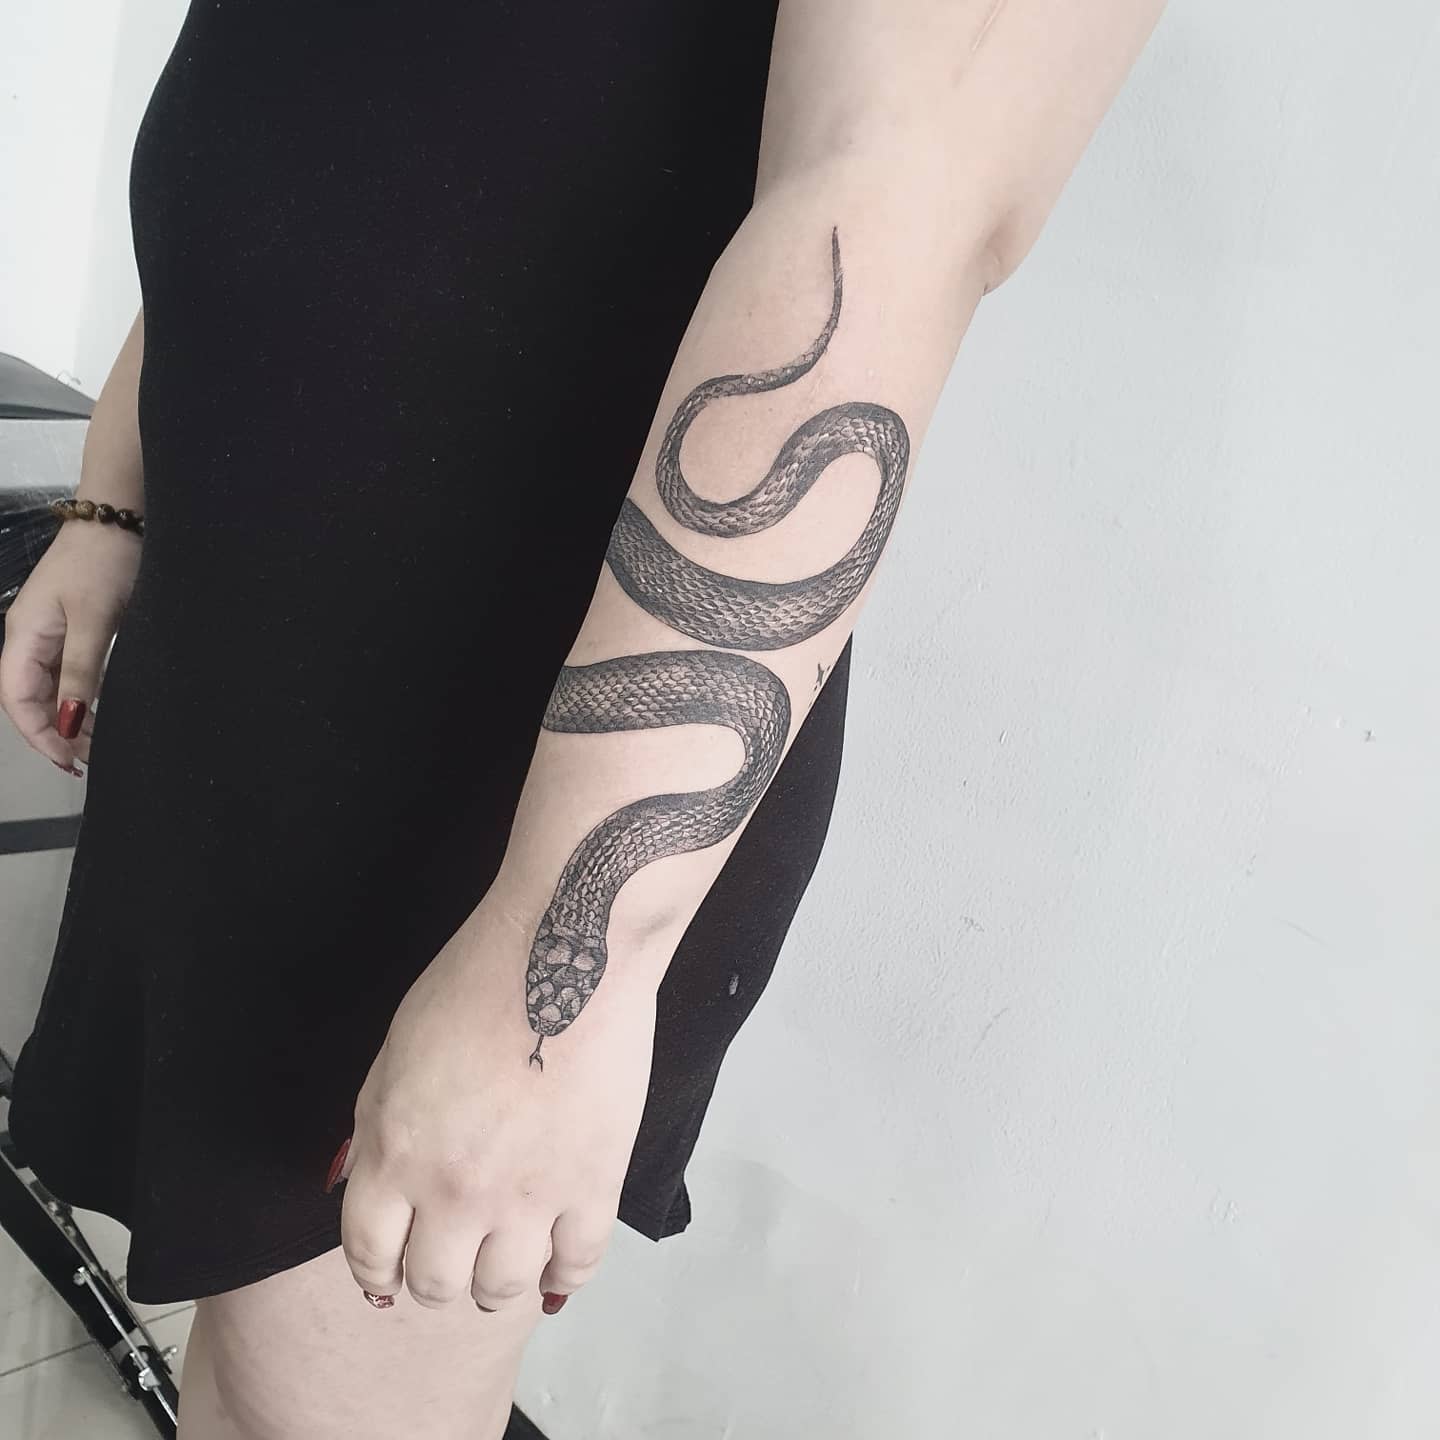 Black mamba tattoo meaning